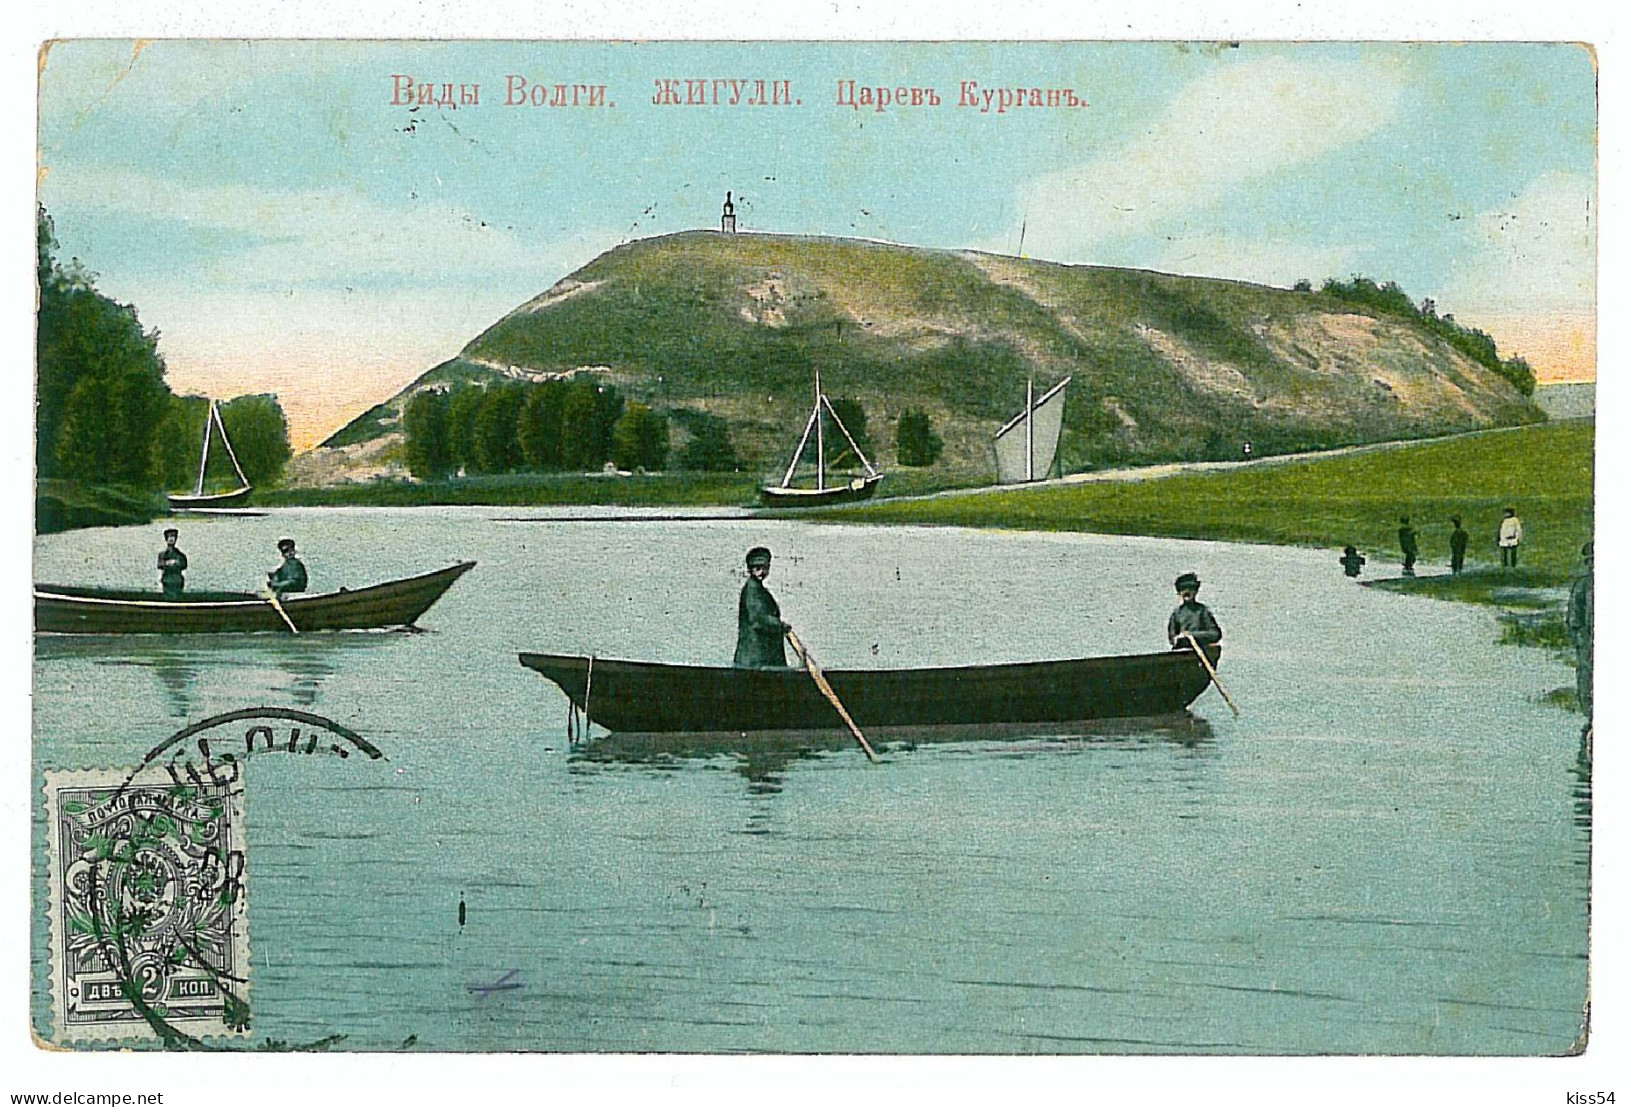 RUS 87 - 7787 WOLGA, Boats, Fishermen, Russia - Old Postcard - Used - 1913 - TCV - Russia